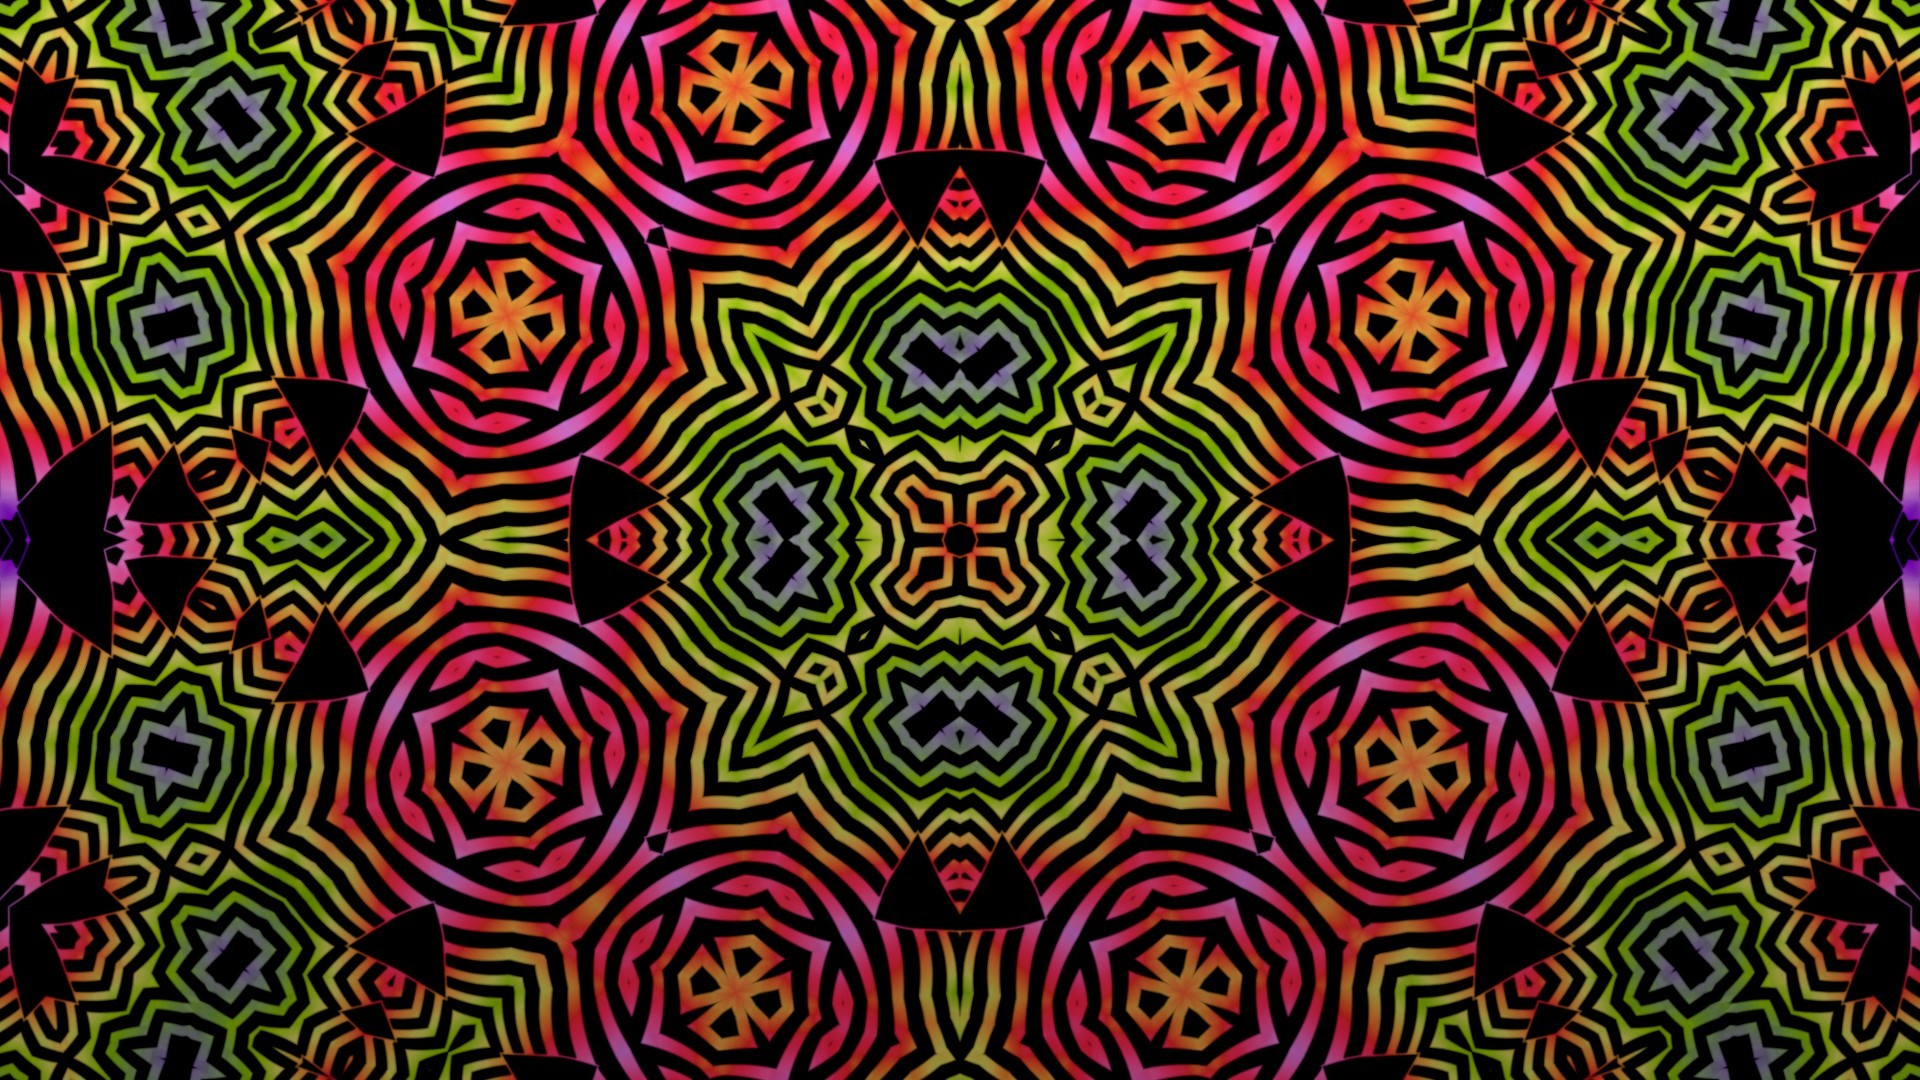 General 1920x1080 abstract surreal LSD digital art